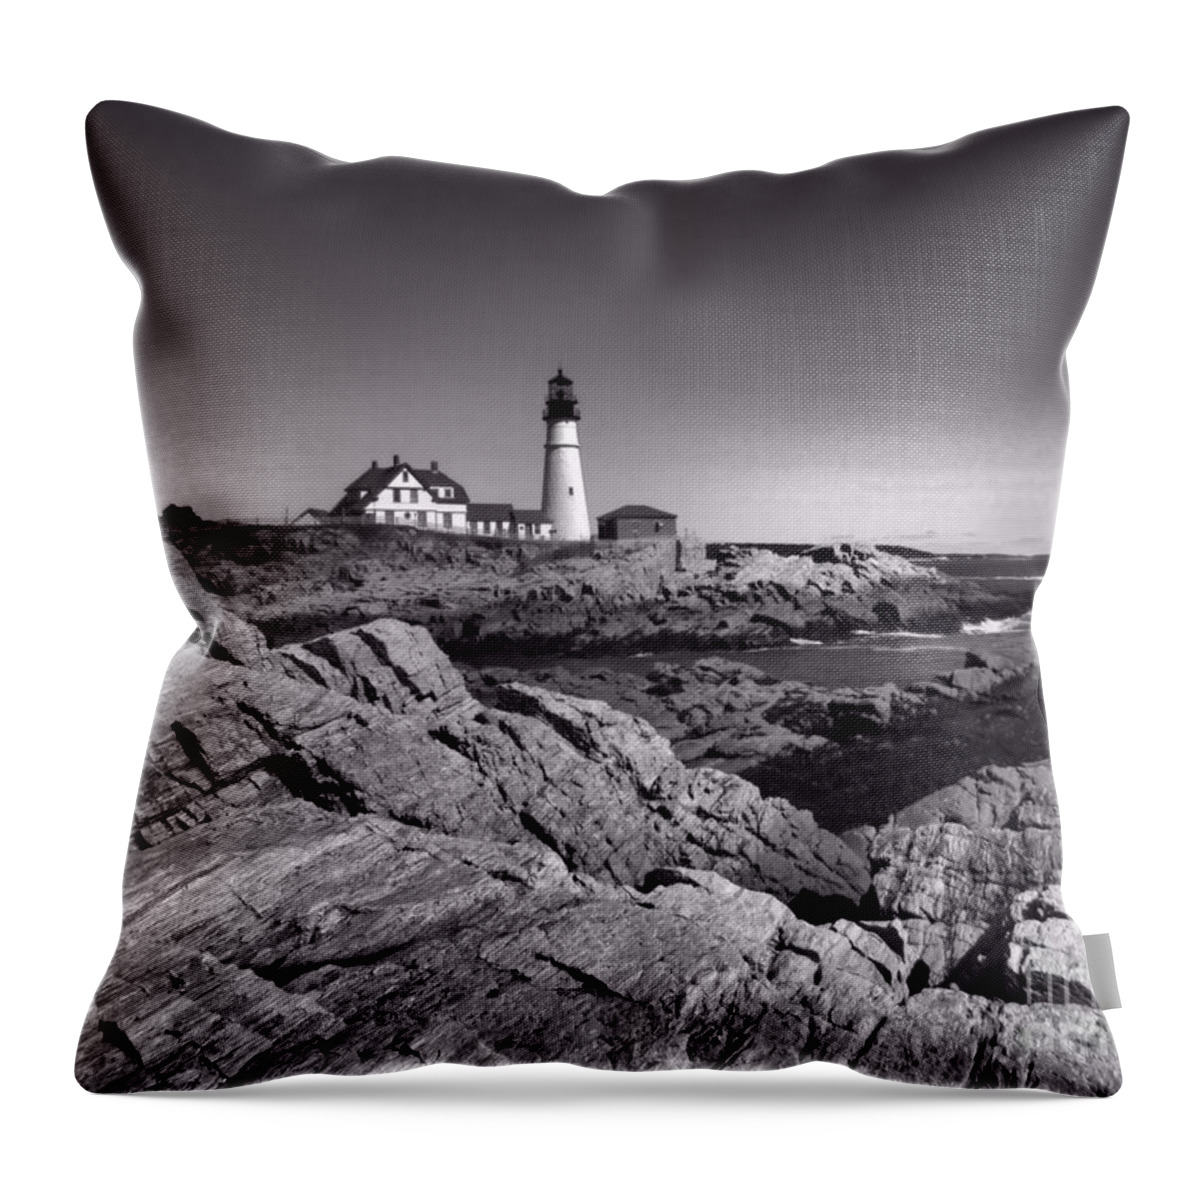 Cape Elizabeth Maine Throw Pillow featuring the photograph Portland Head Light by Elizabeth Dow